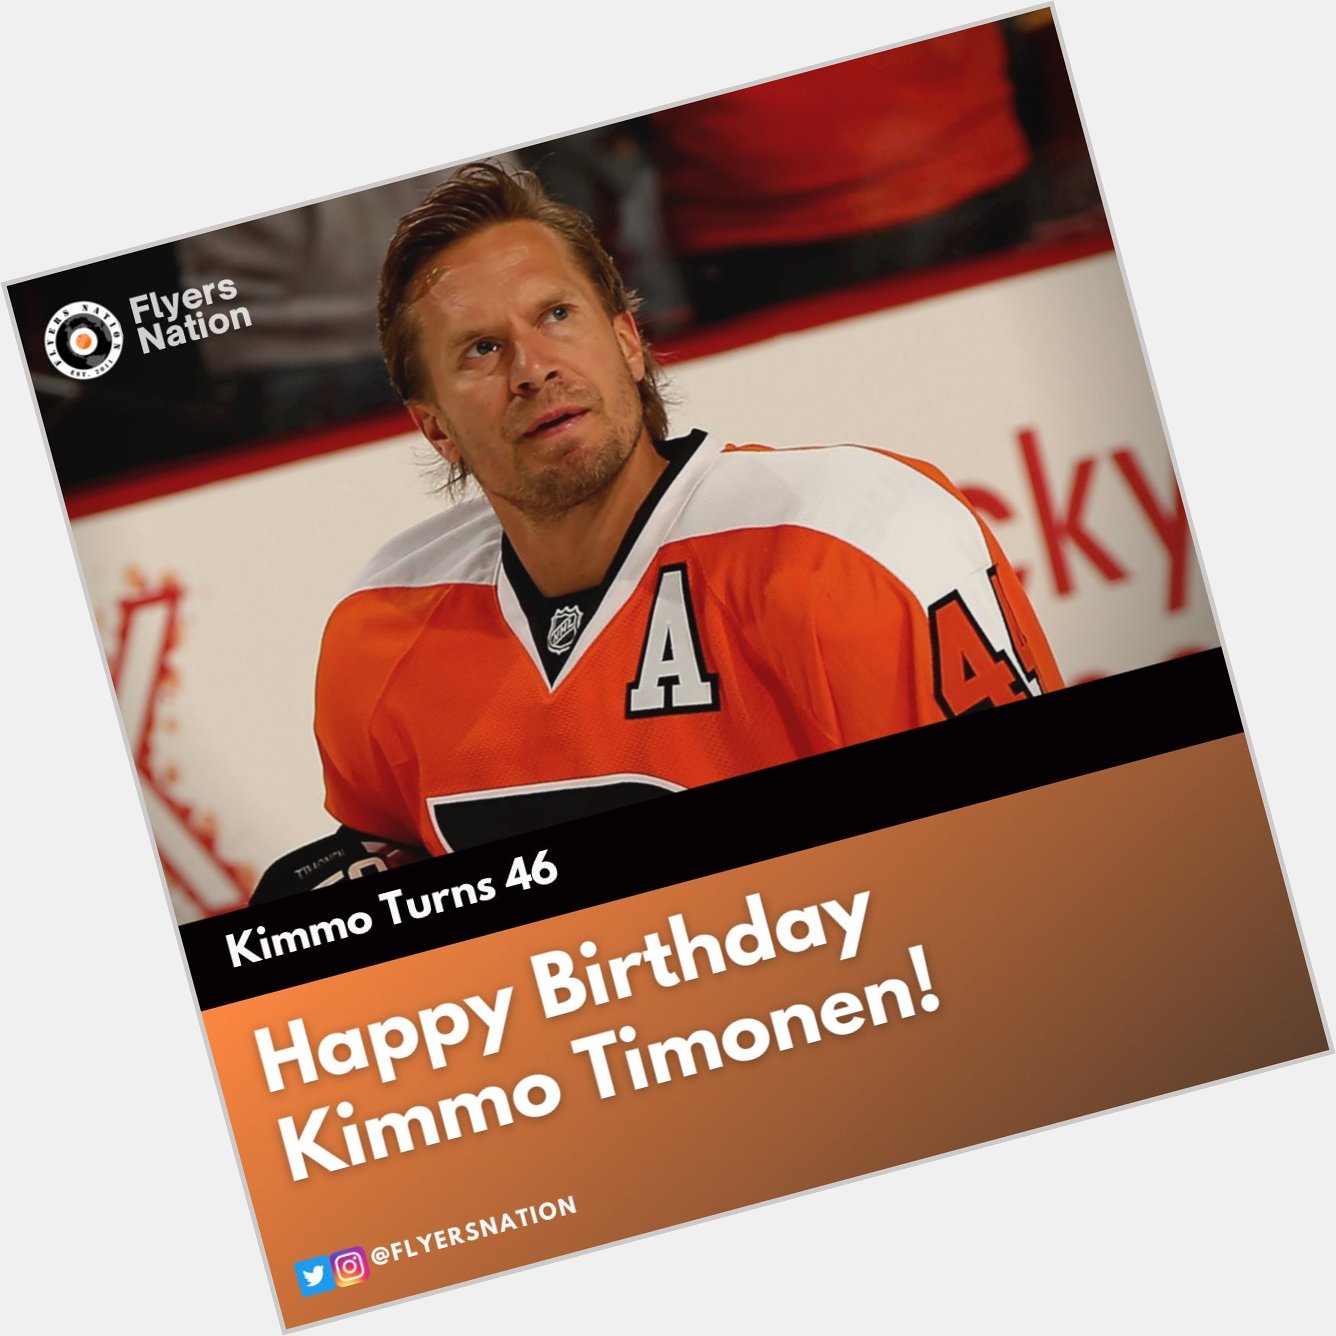 Kimmo Timonen turns 46 today, happy birthday!   